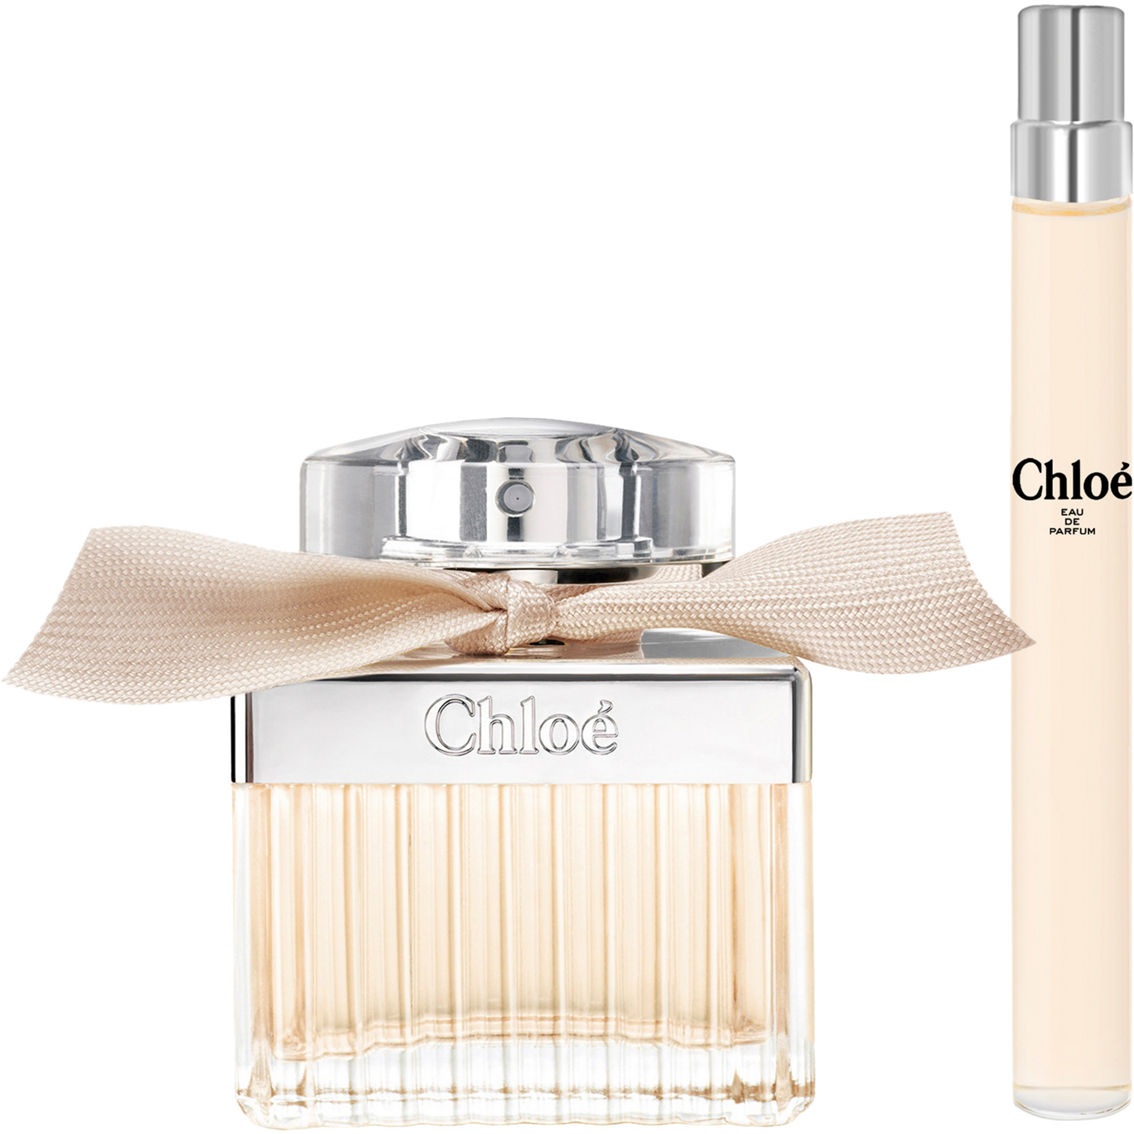 Chloe Eau de Parfum Gift Set - Image 2 of 3